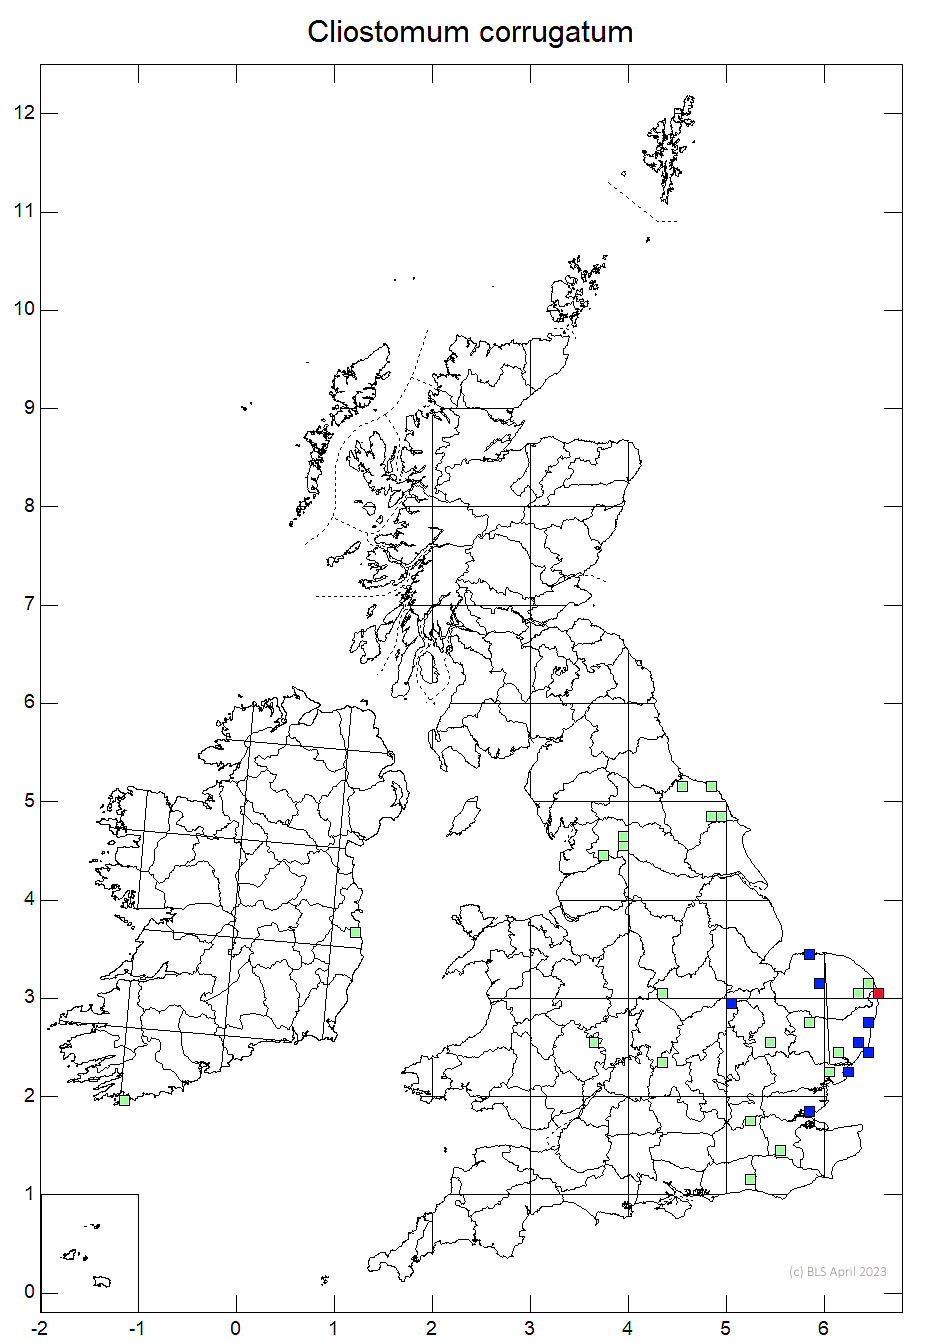 Cliostomum corrugatum 10km sq distribution map